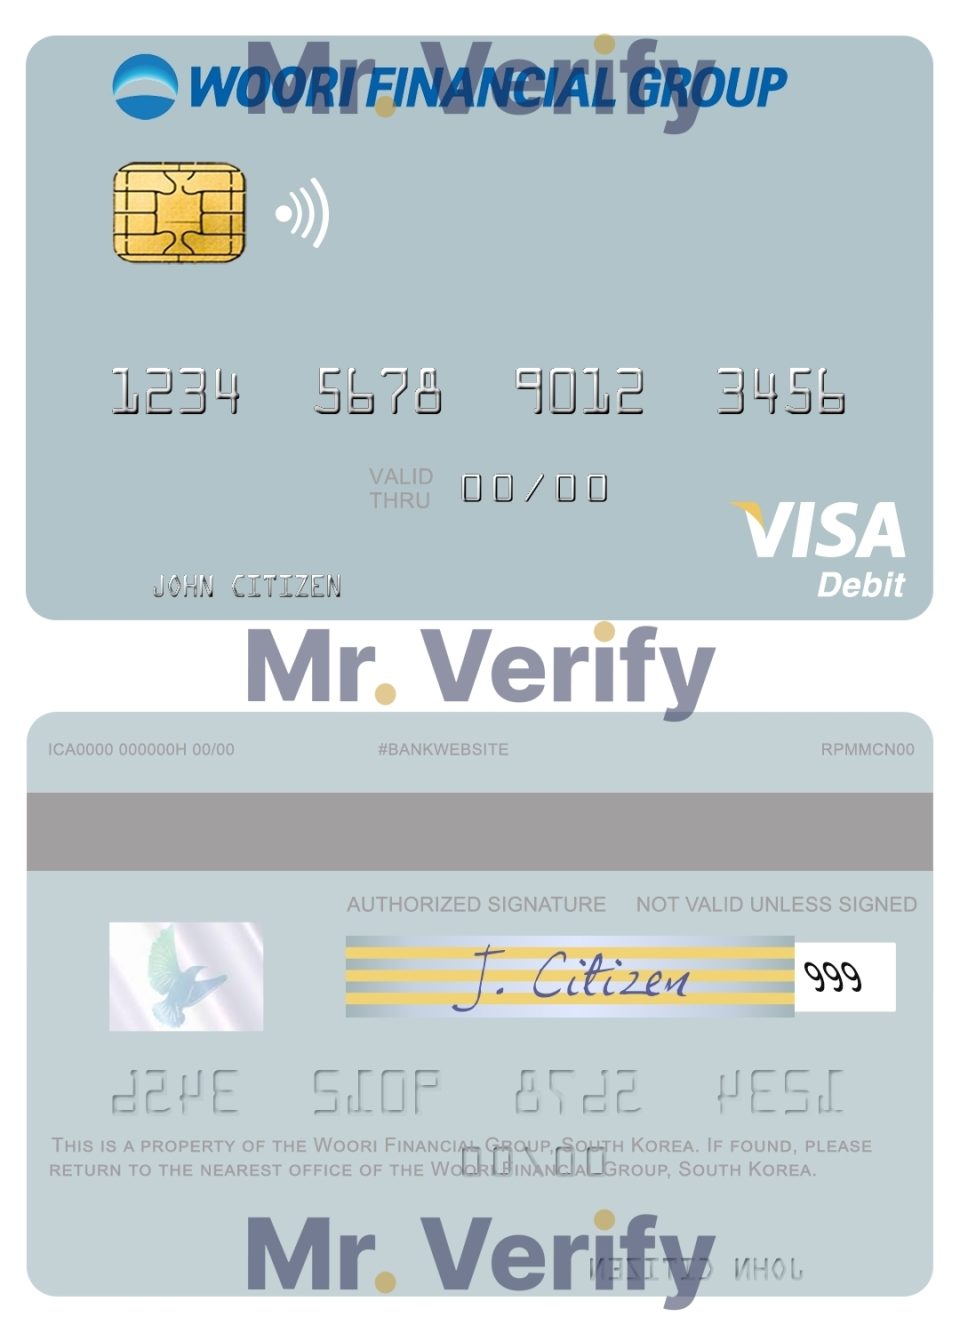 Editable South Korea Woori Financial Group visa debit card Templates in PSD Format